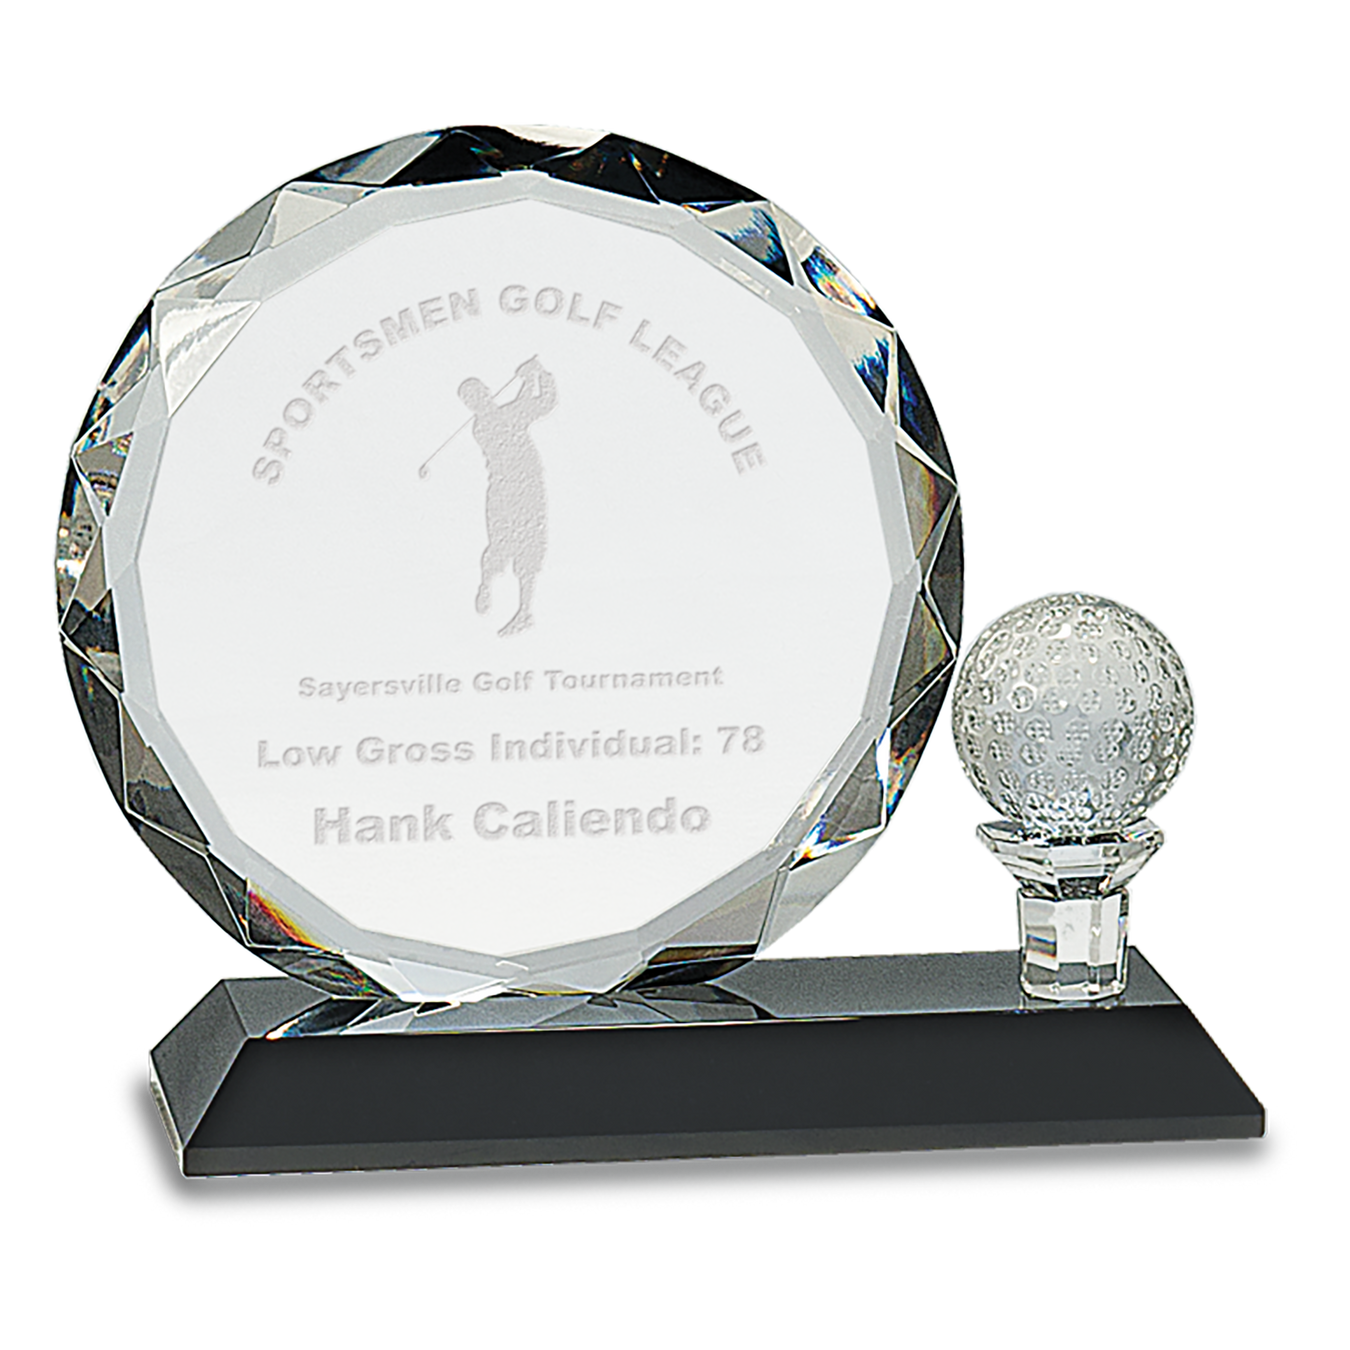 Crystal golf award for tournament.